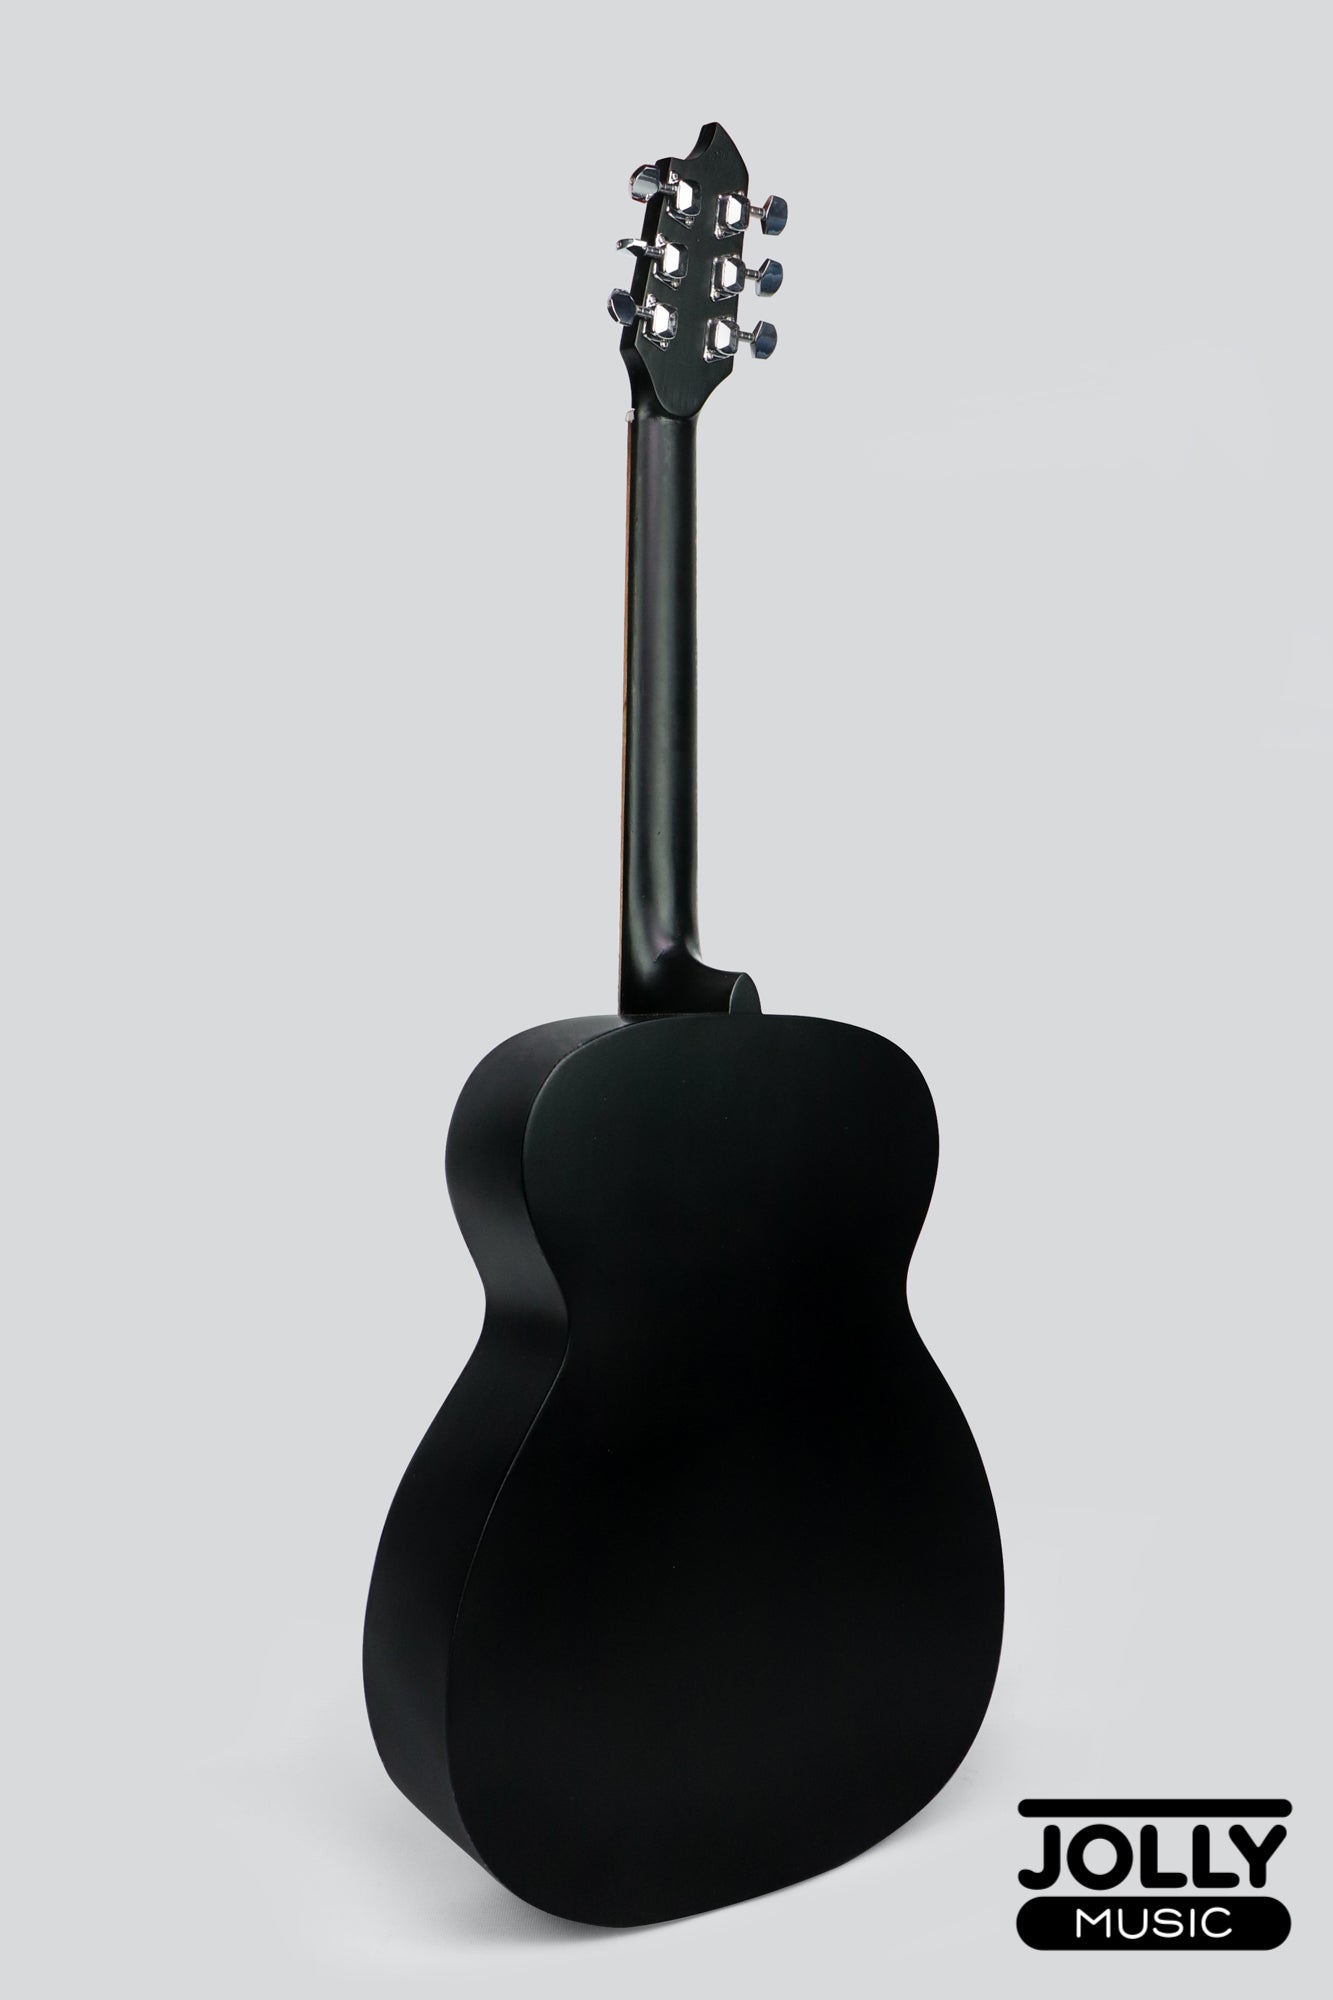 Ferangeli Gel-Series 41-inch OM Acoustic Guitar (Made in Cebu) - Black